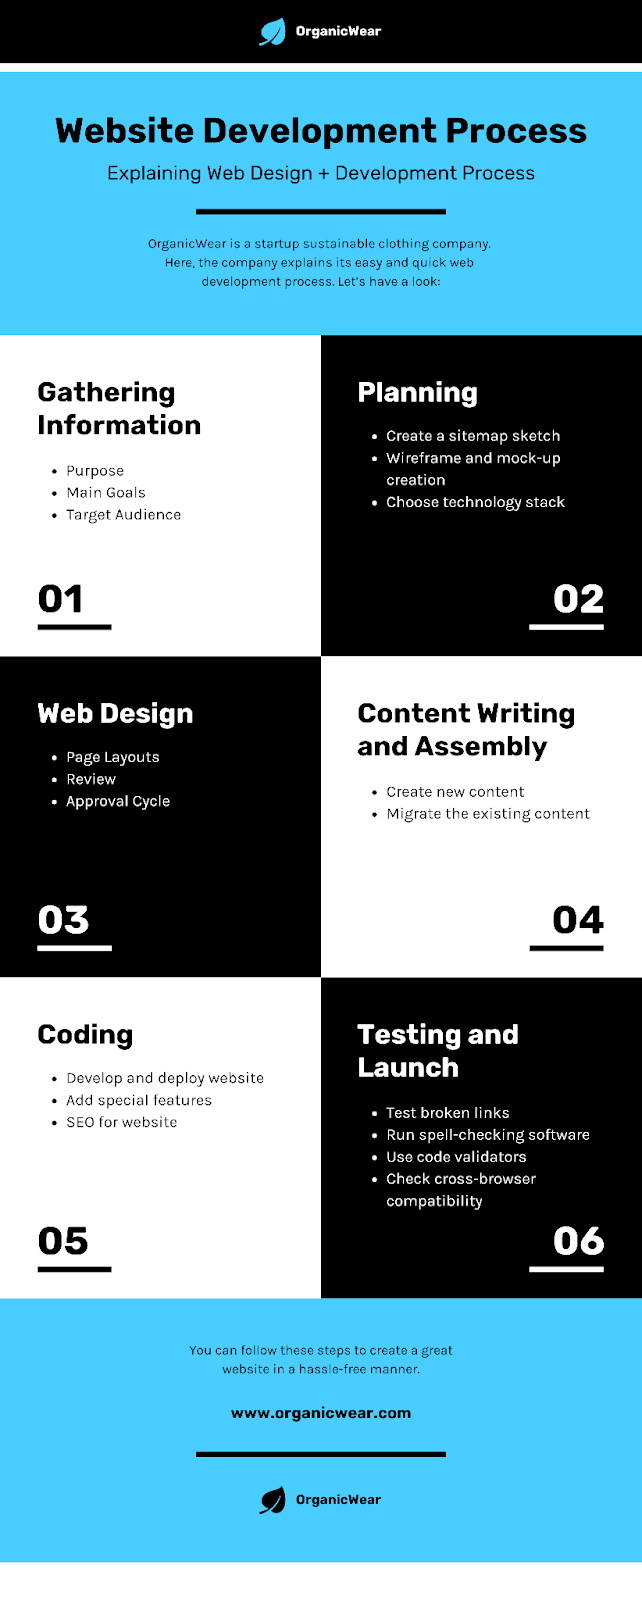 Website Development Process Infographic